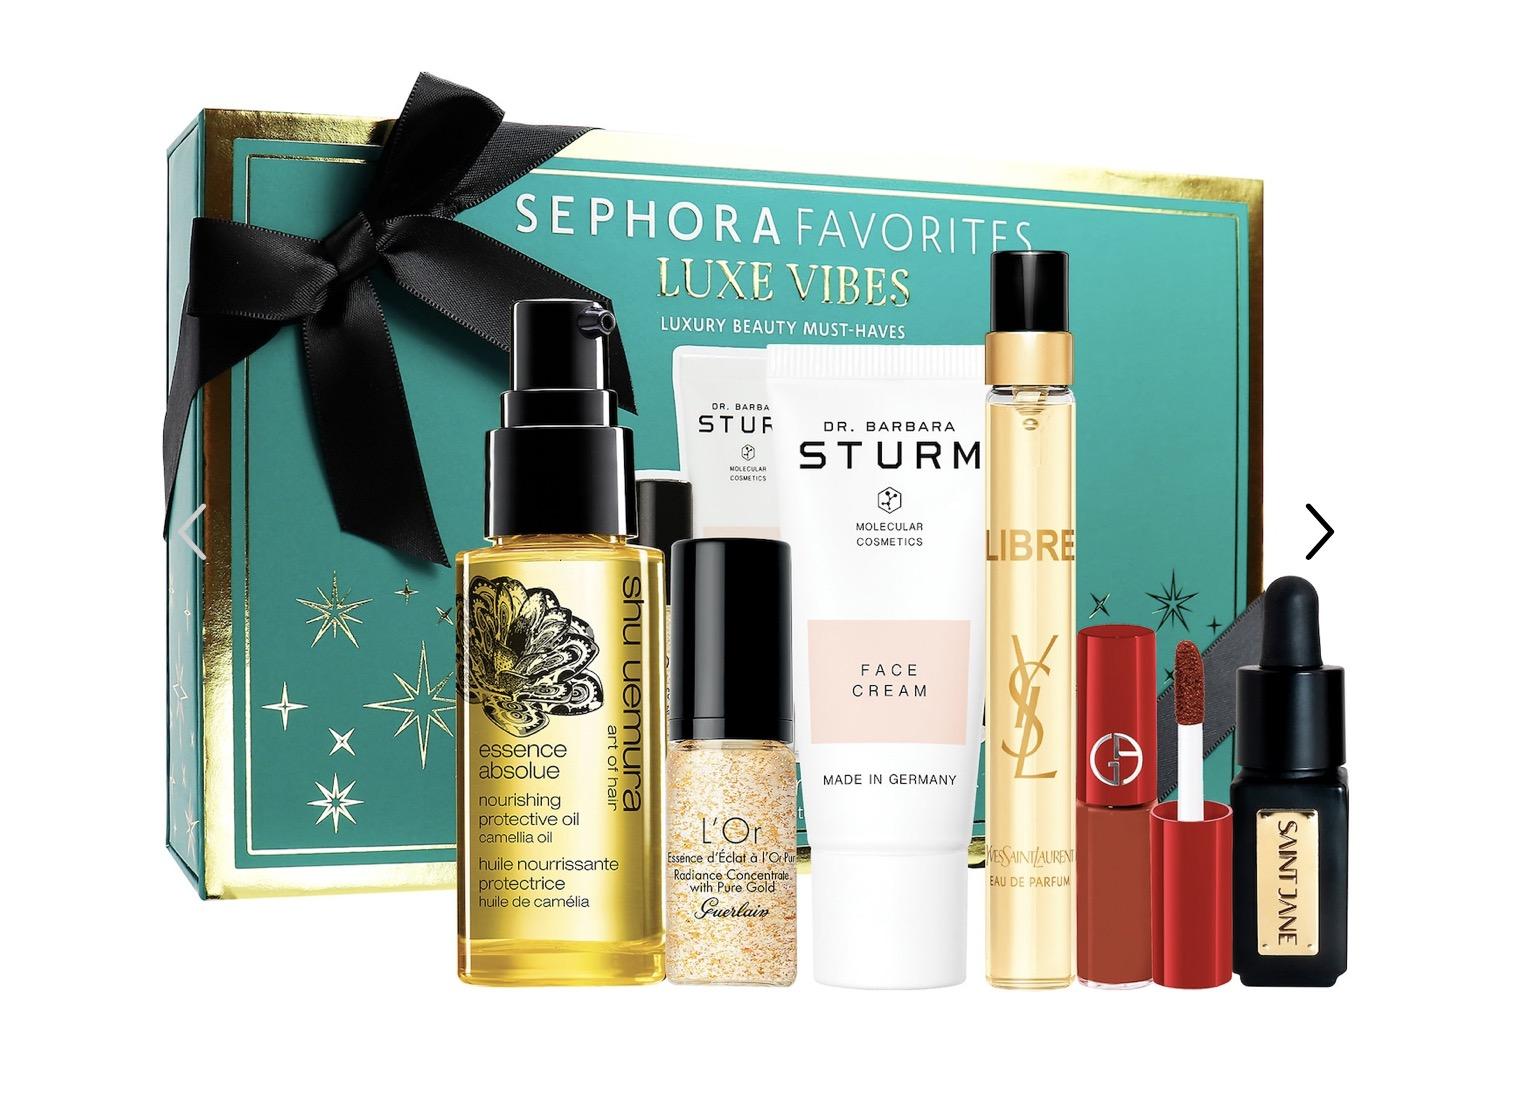 Sephora Favorites Luxe Vibes Mini Luxury Beauty Sampler Set – Save 50%!